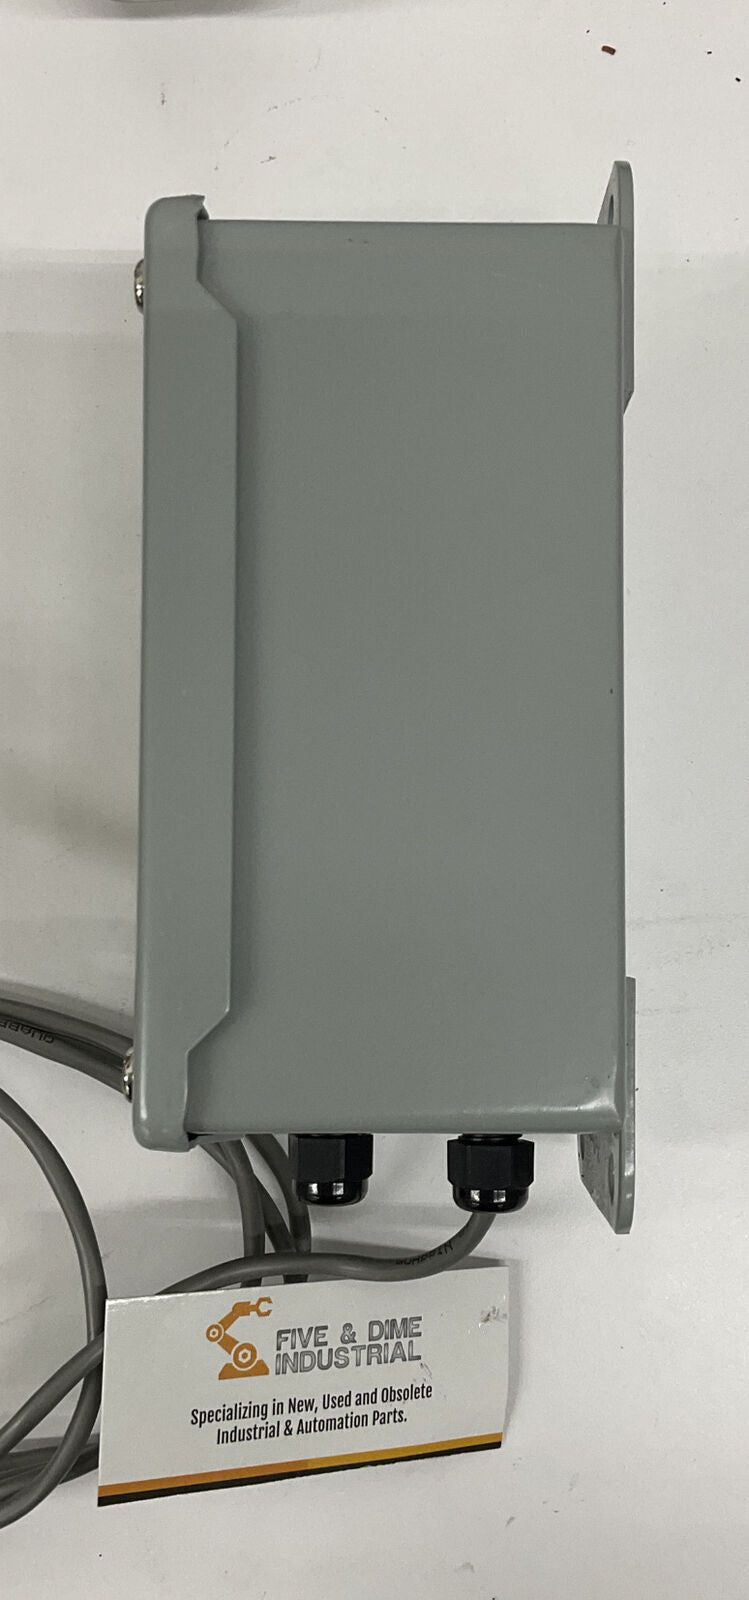 Dwyer 640-0 Air Velocity Transmitter Series 640 (OV117)